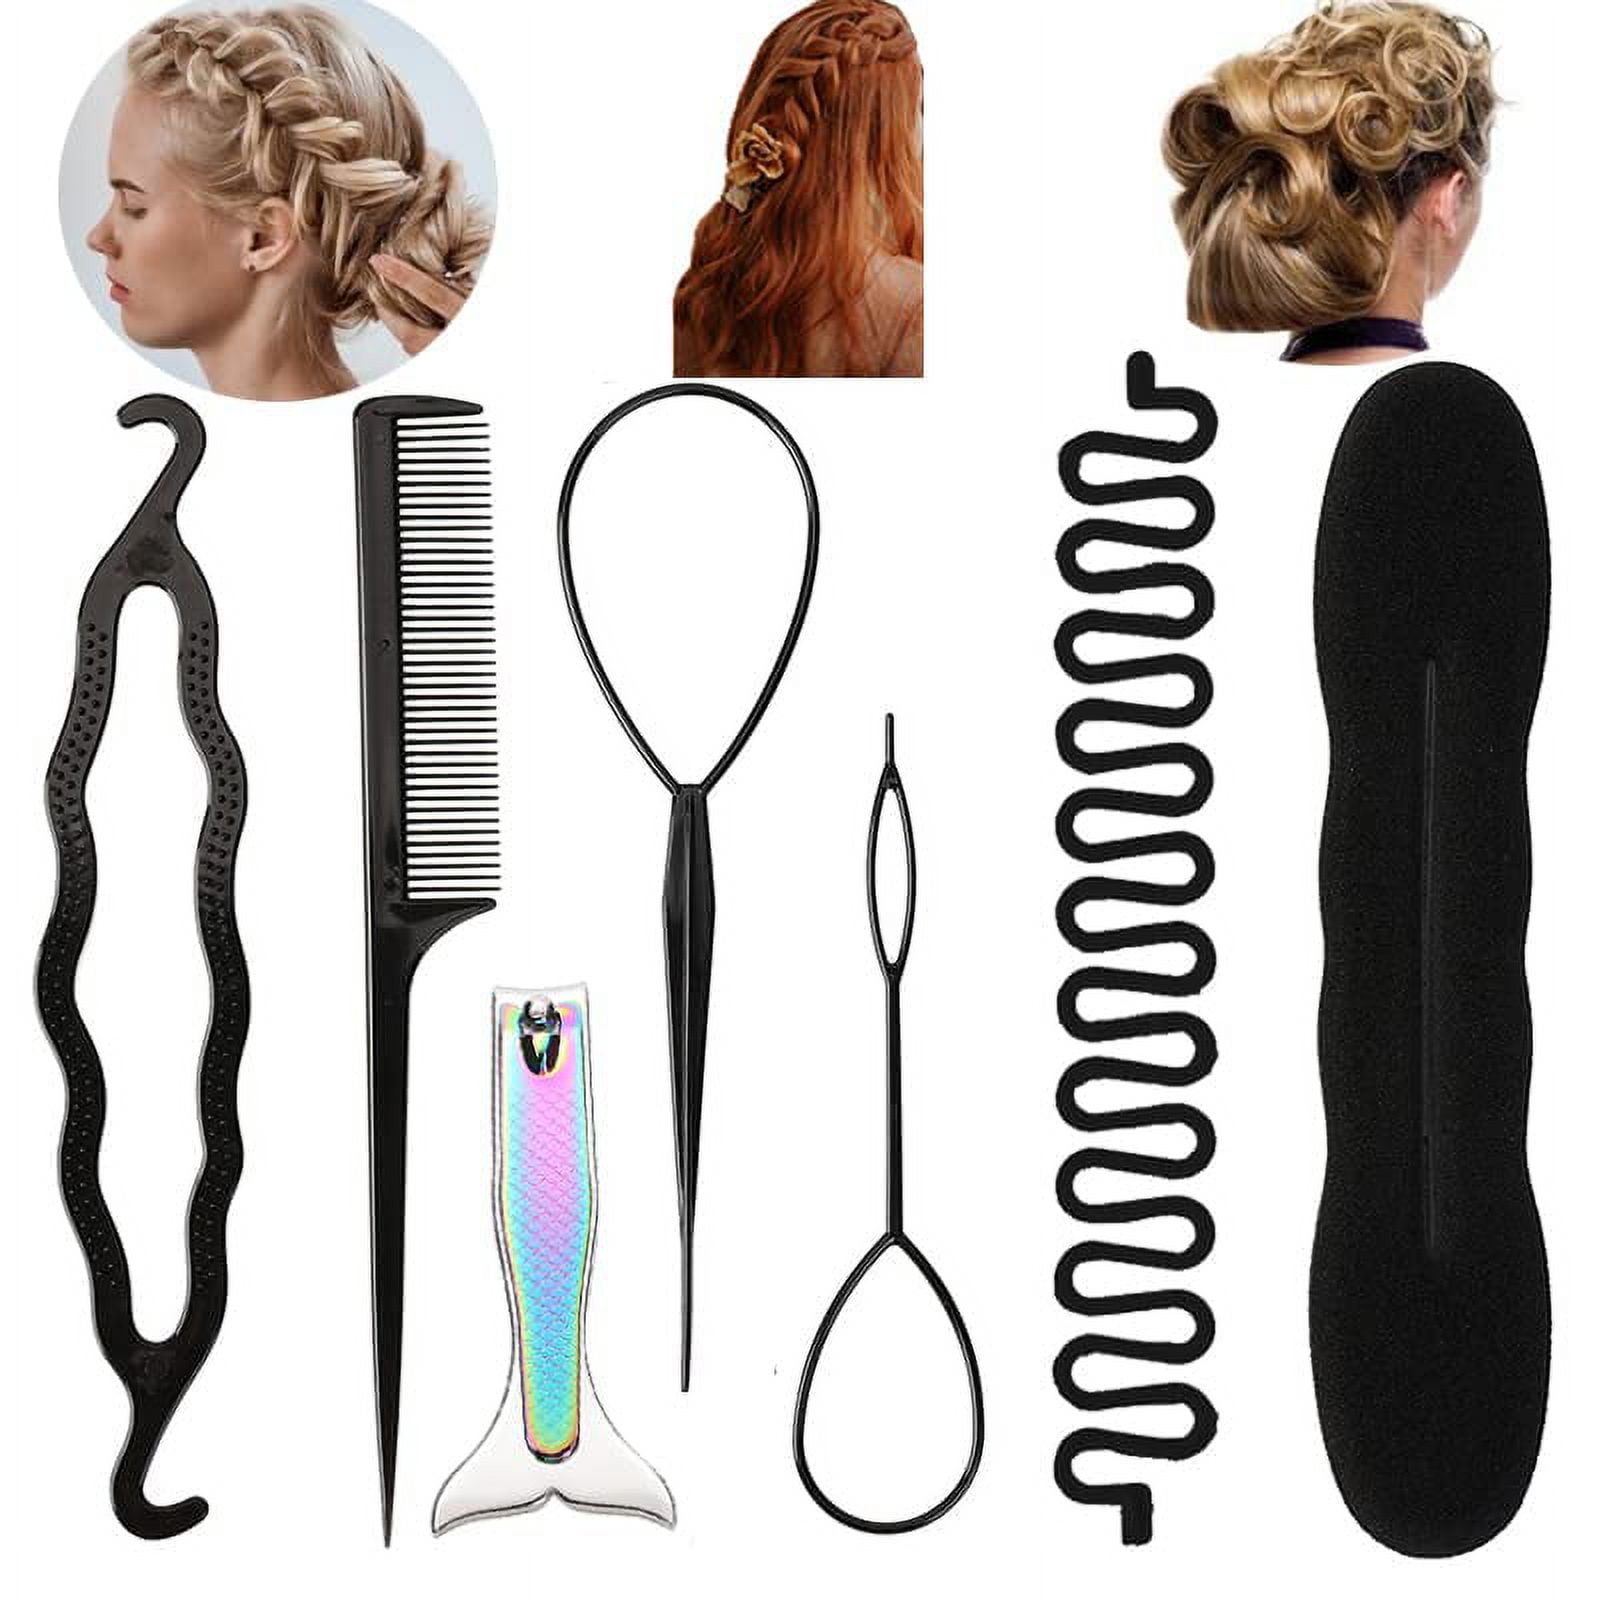 Menkey Hair Tail Tool, Hair Loop Tool, Hair Pull, Ponytail Pull Through Tool, Hair Threader, Hair Tool Flip for Styling, Updo Hair Braid Tool, Inside Out